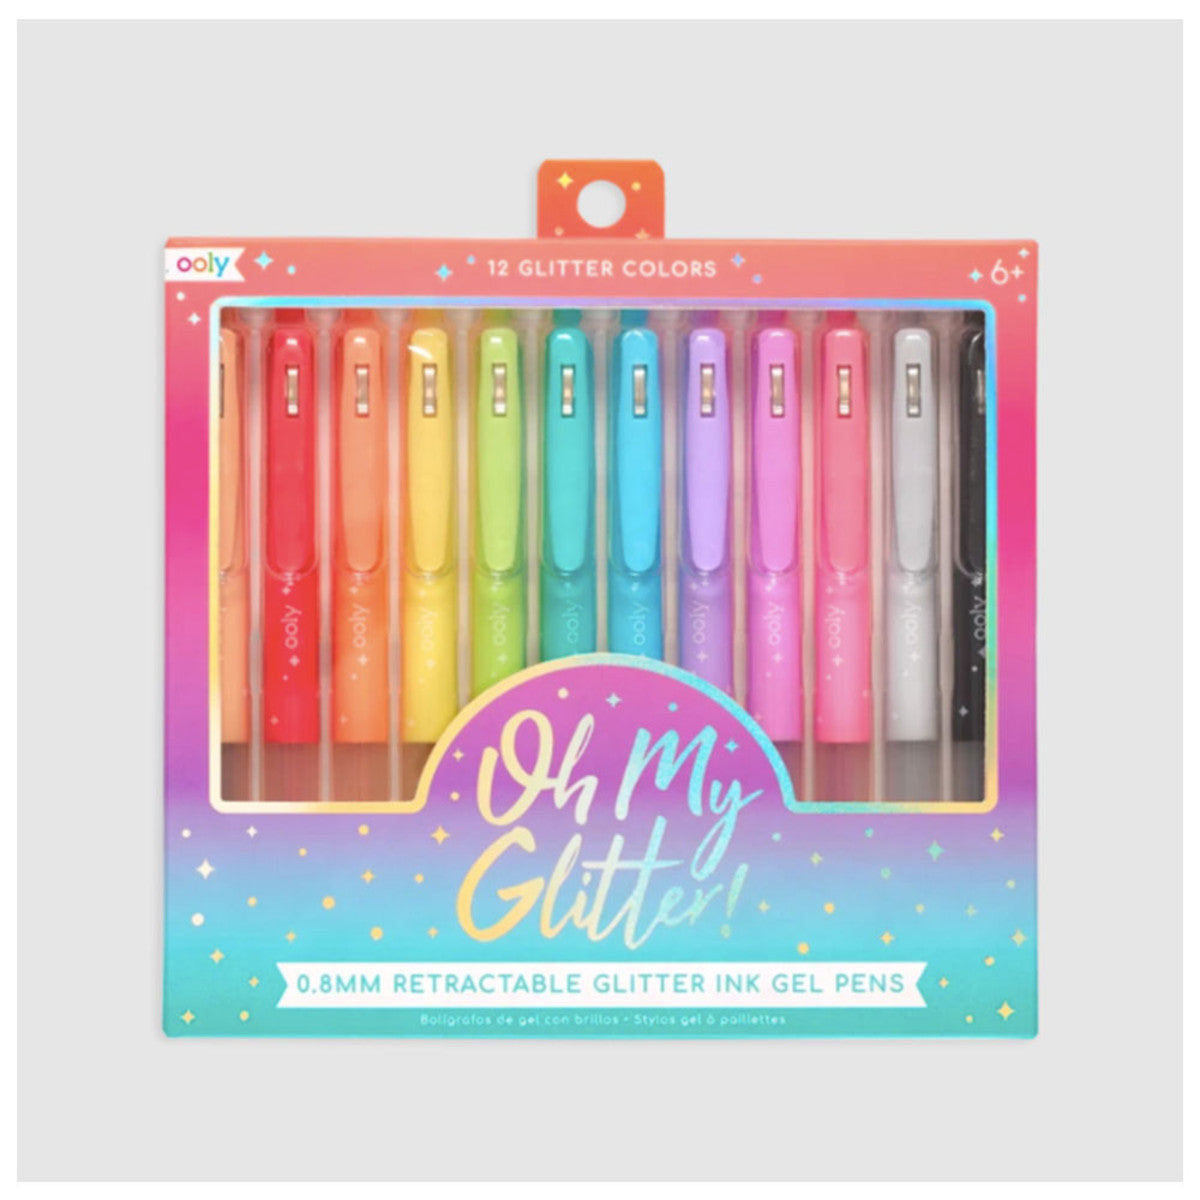 Oh My Glitter! Glitter Ink Gel Pens